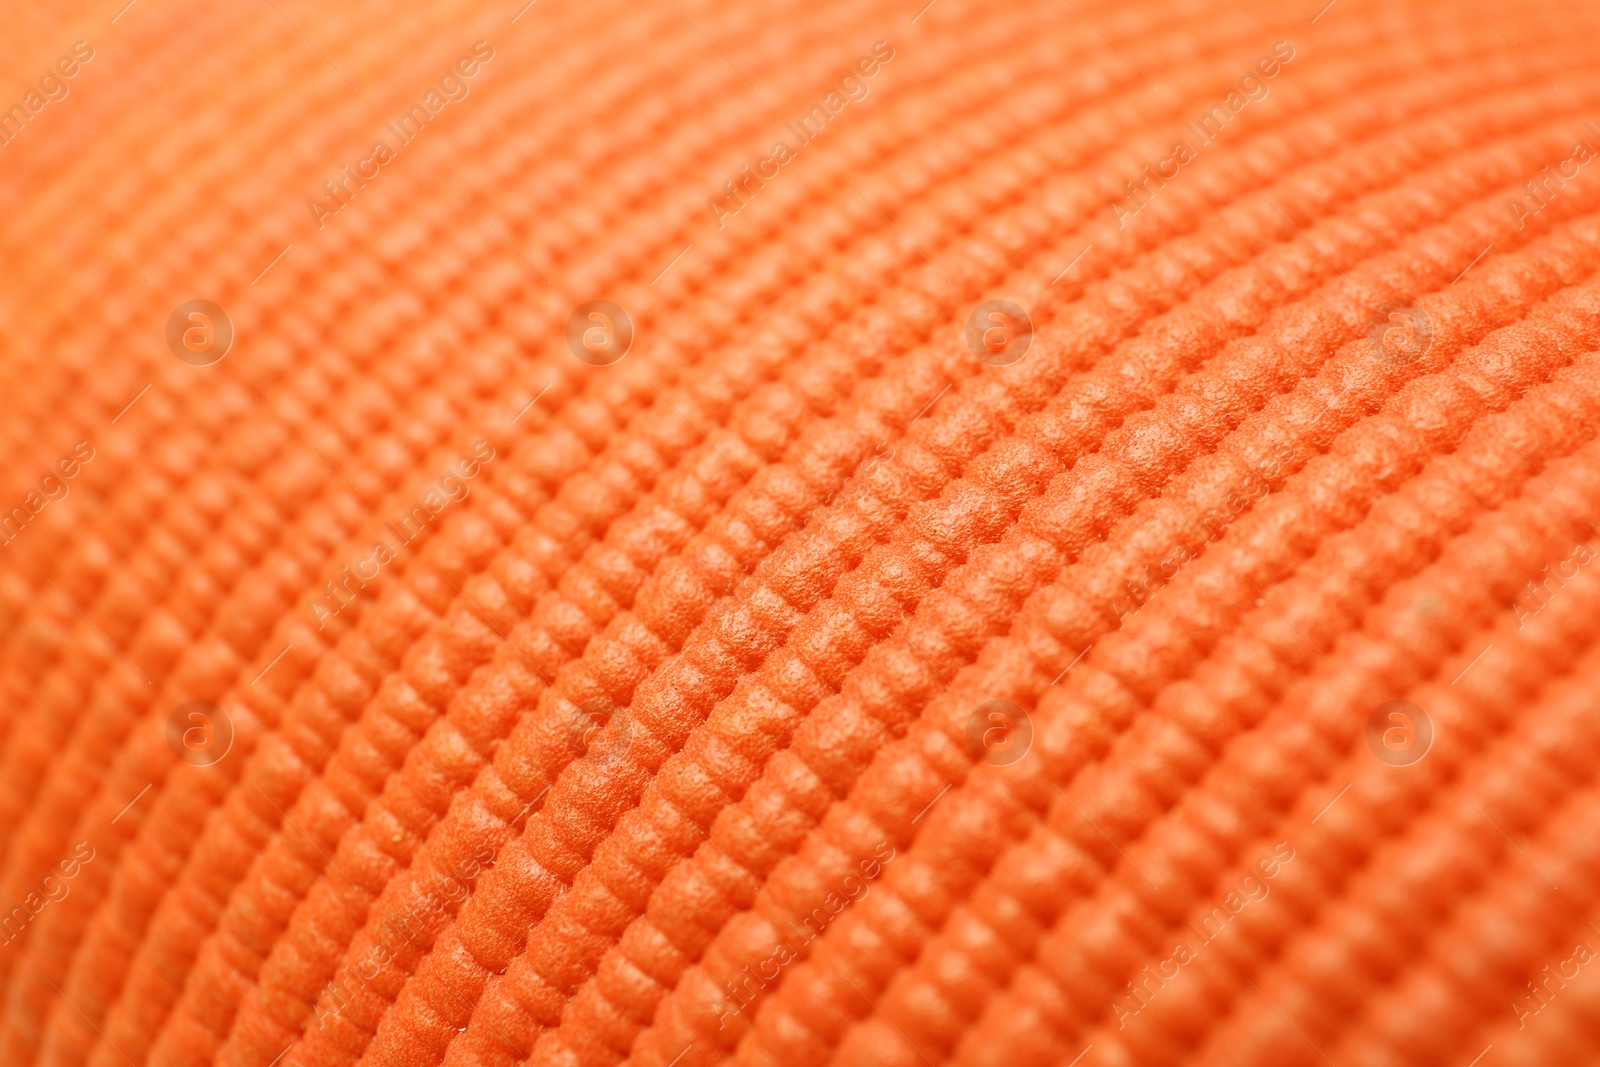 Photo of Orange foam rubber mat as background, closeup view